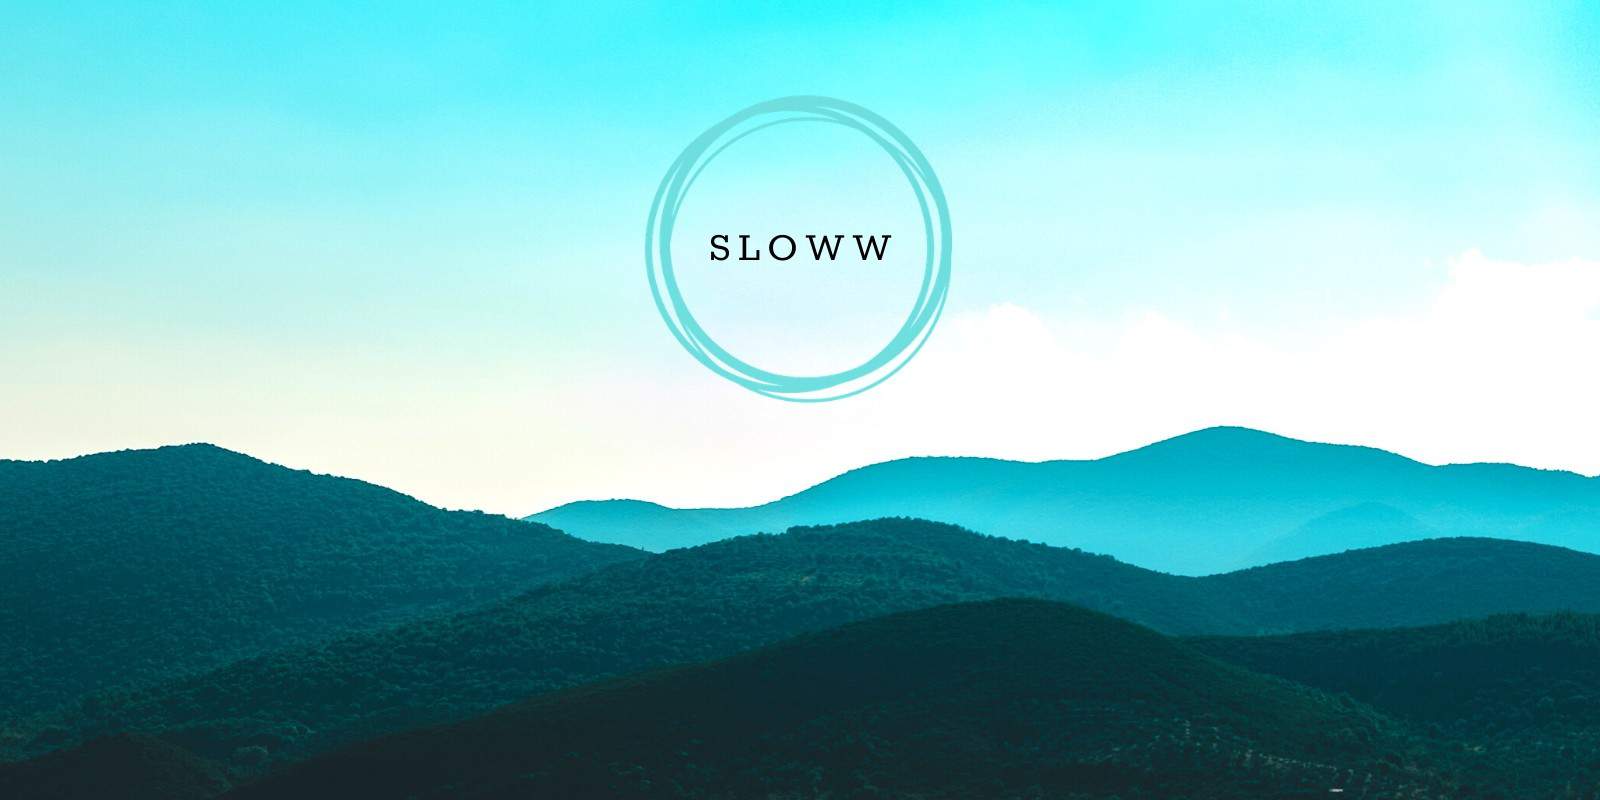 Sloww Slow Down to Awaken the Art of Living